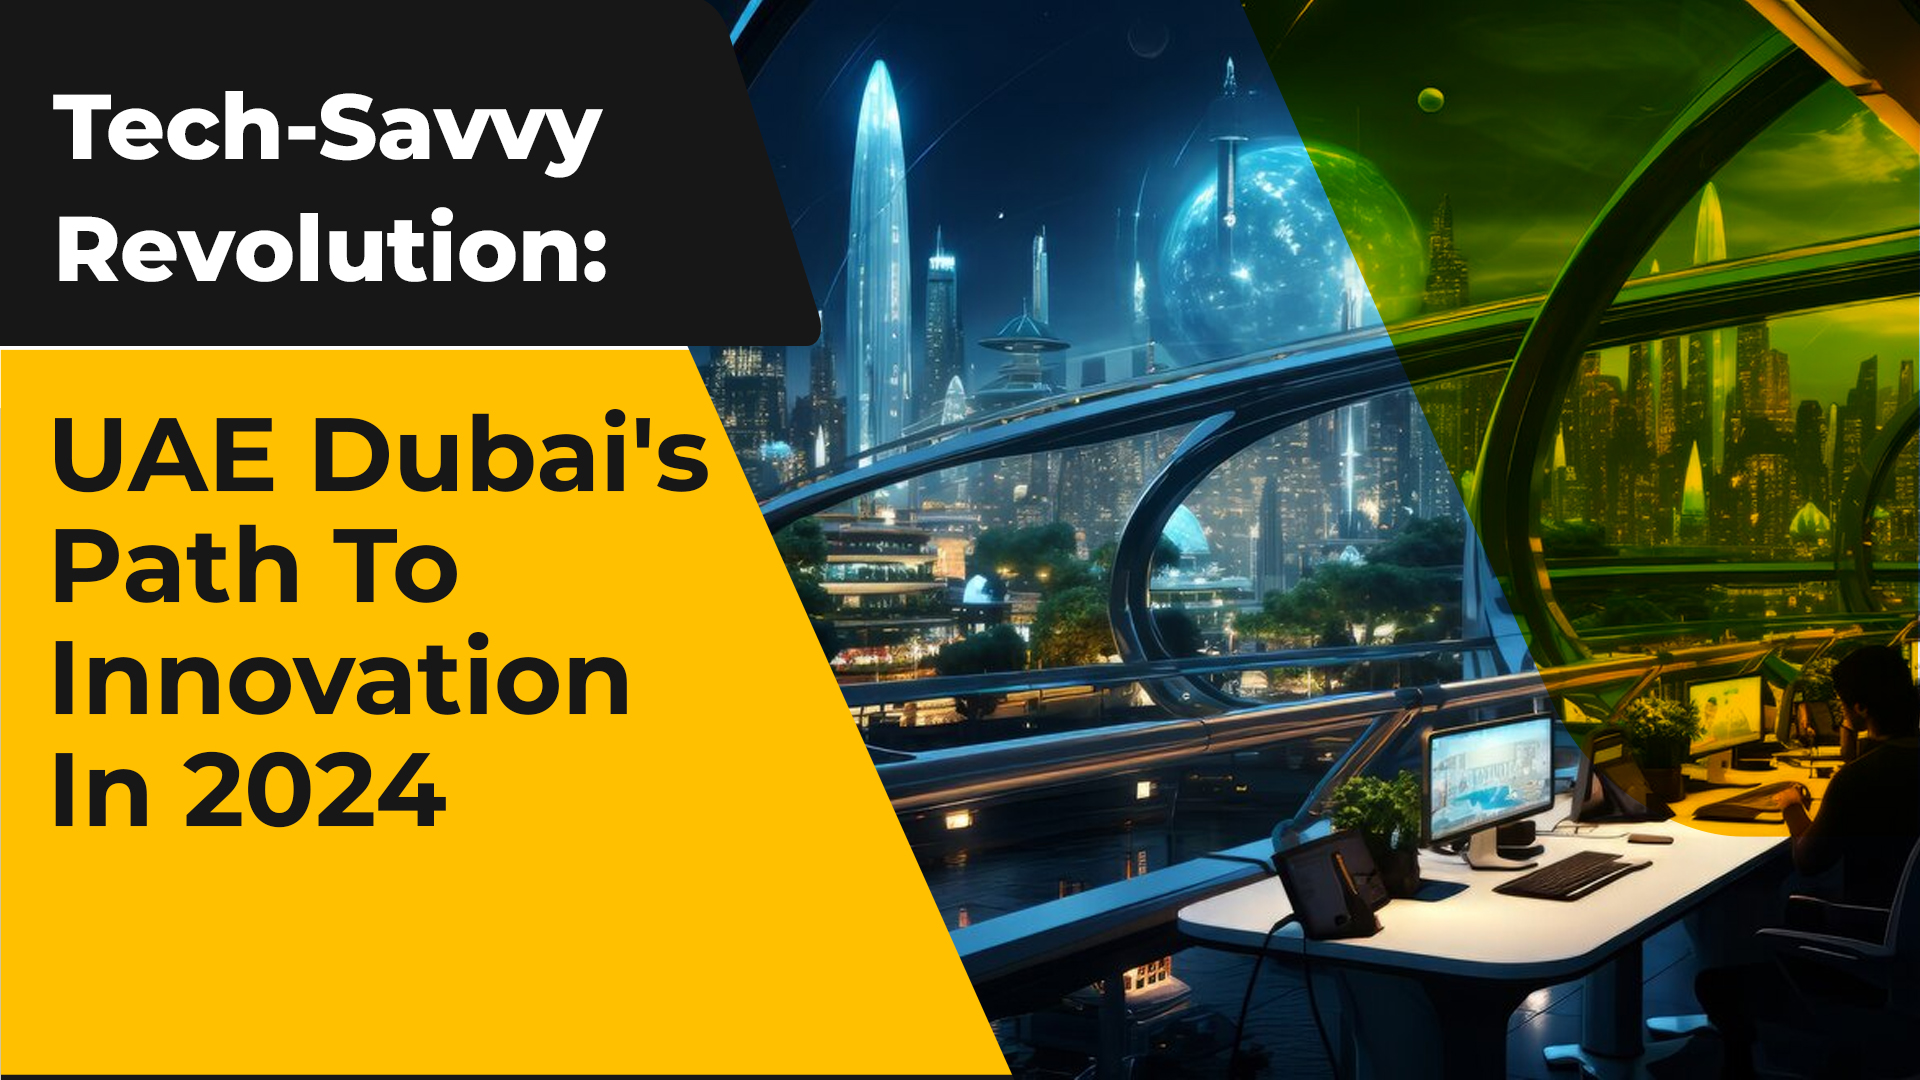 Tech-Savvy Revolution: UAE Dubai's Path To Innovation In 2024